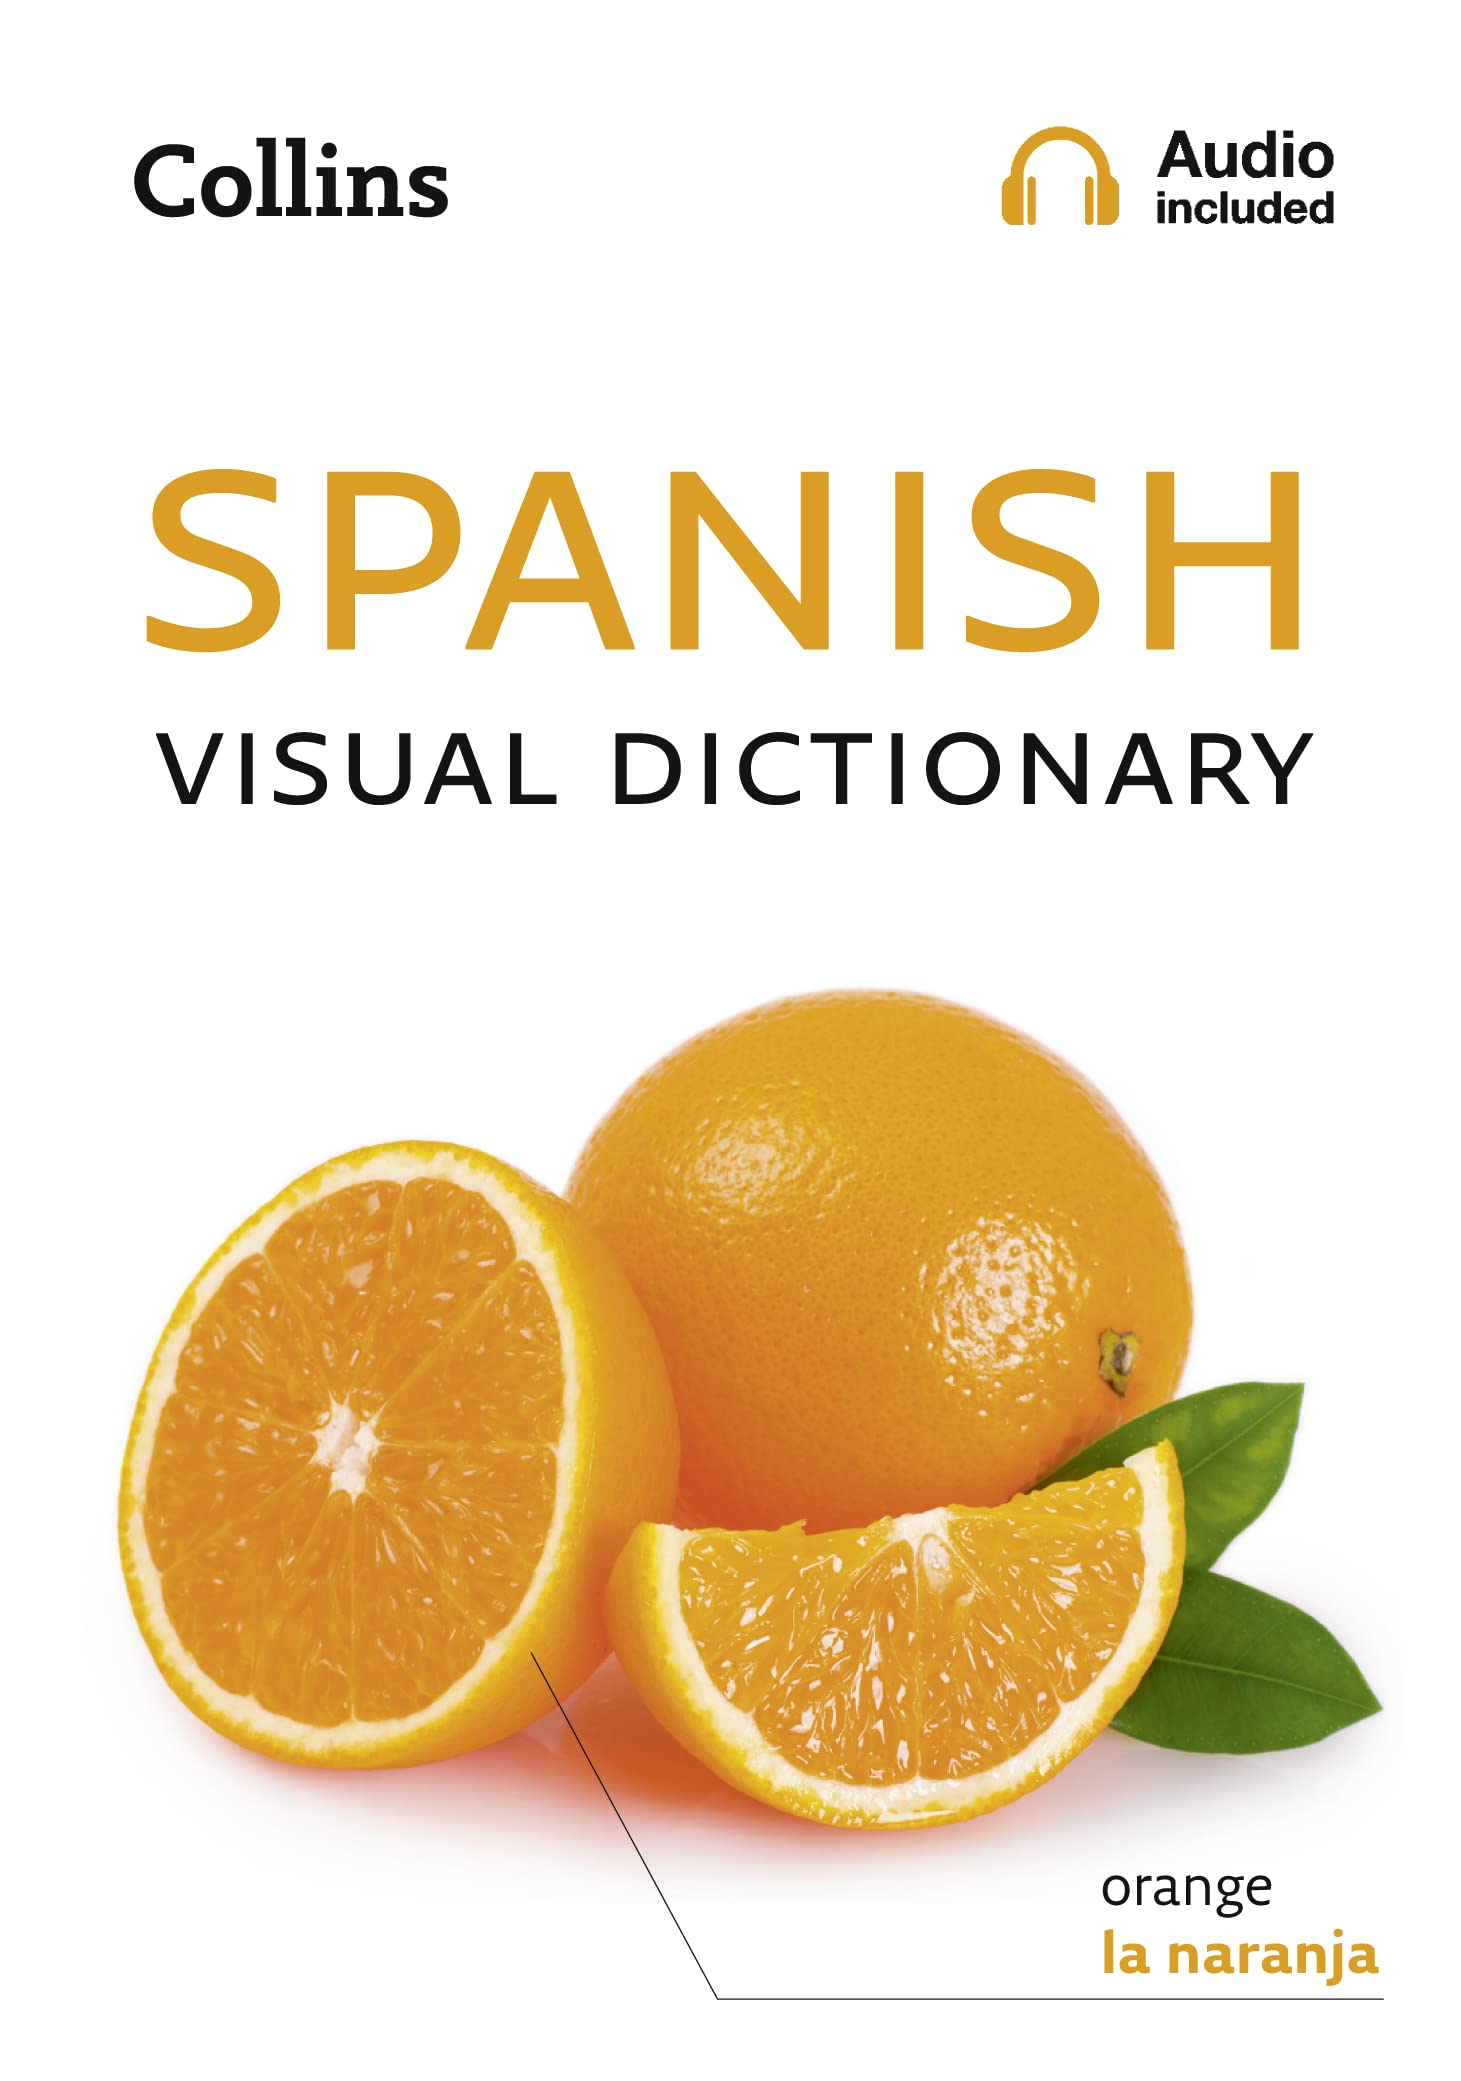 Collins Visual Dictionary: Spanish